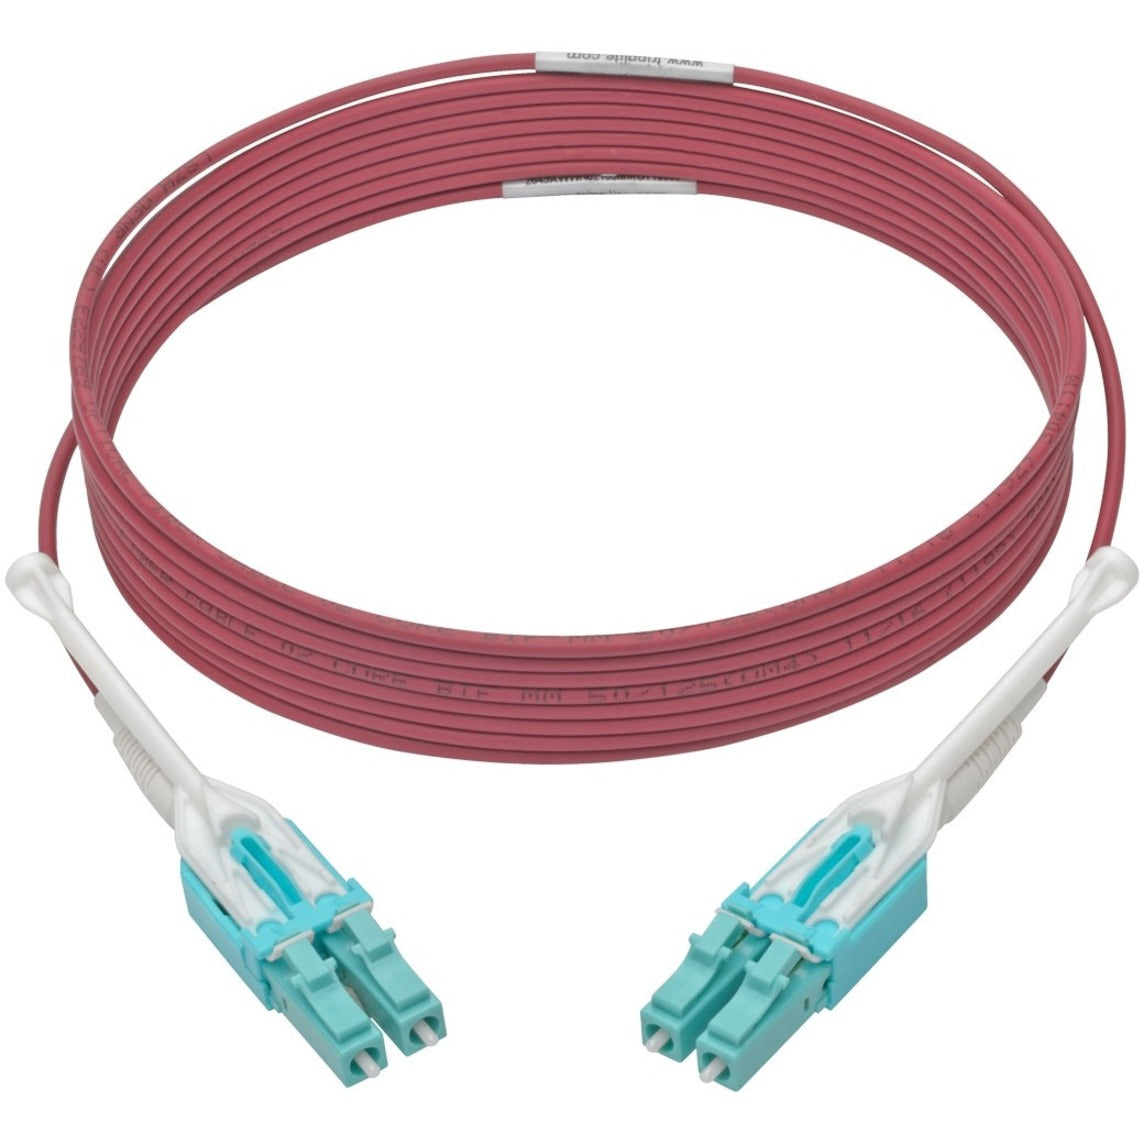 Tripp Lite N821-03M-MG-T Fiber Optic Network Cable, 10 ft, Multi-mode, 100 Gbit/s, Magenta